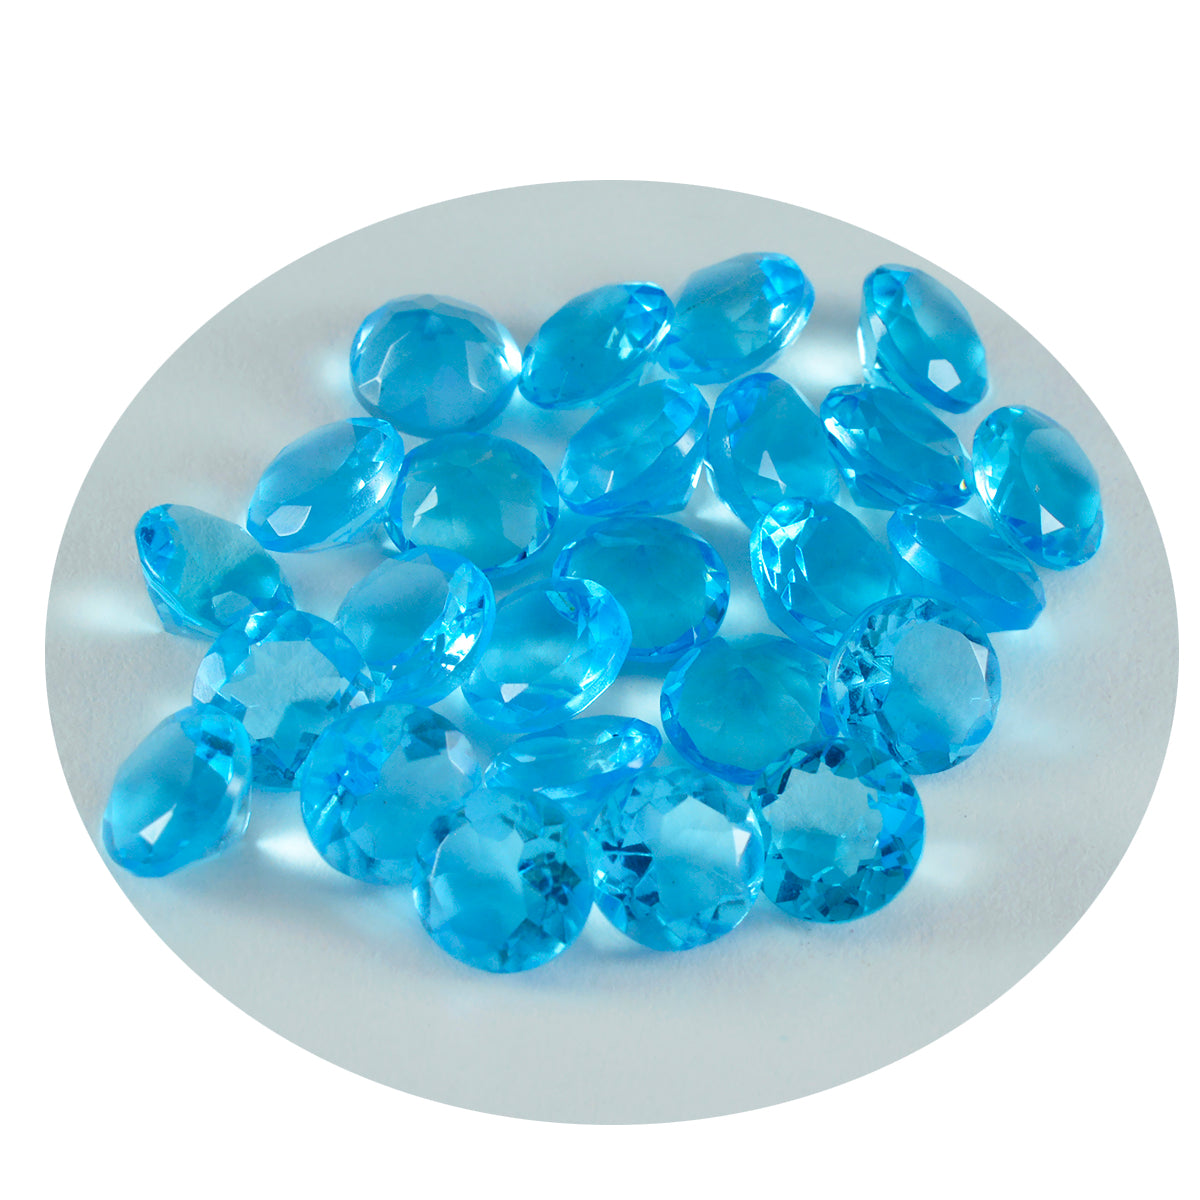 Riyogems 1PC Blue Topaz CZ Faceted 6x6 mm Round Shape beauty Quality Loose Gems